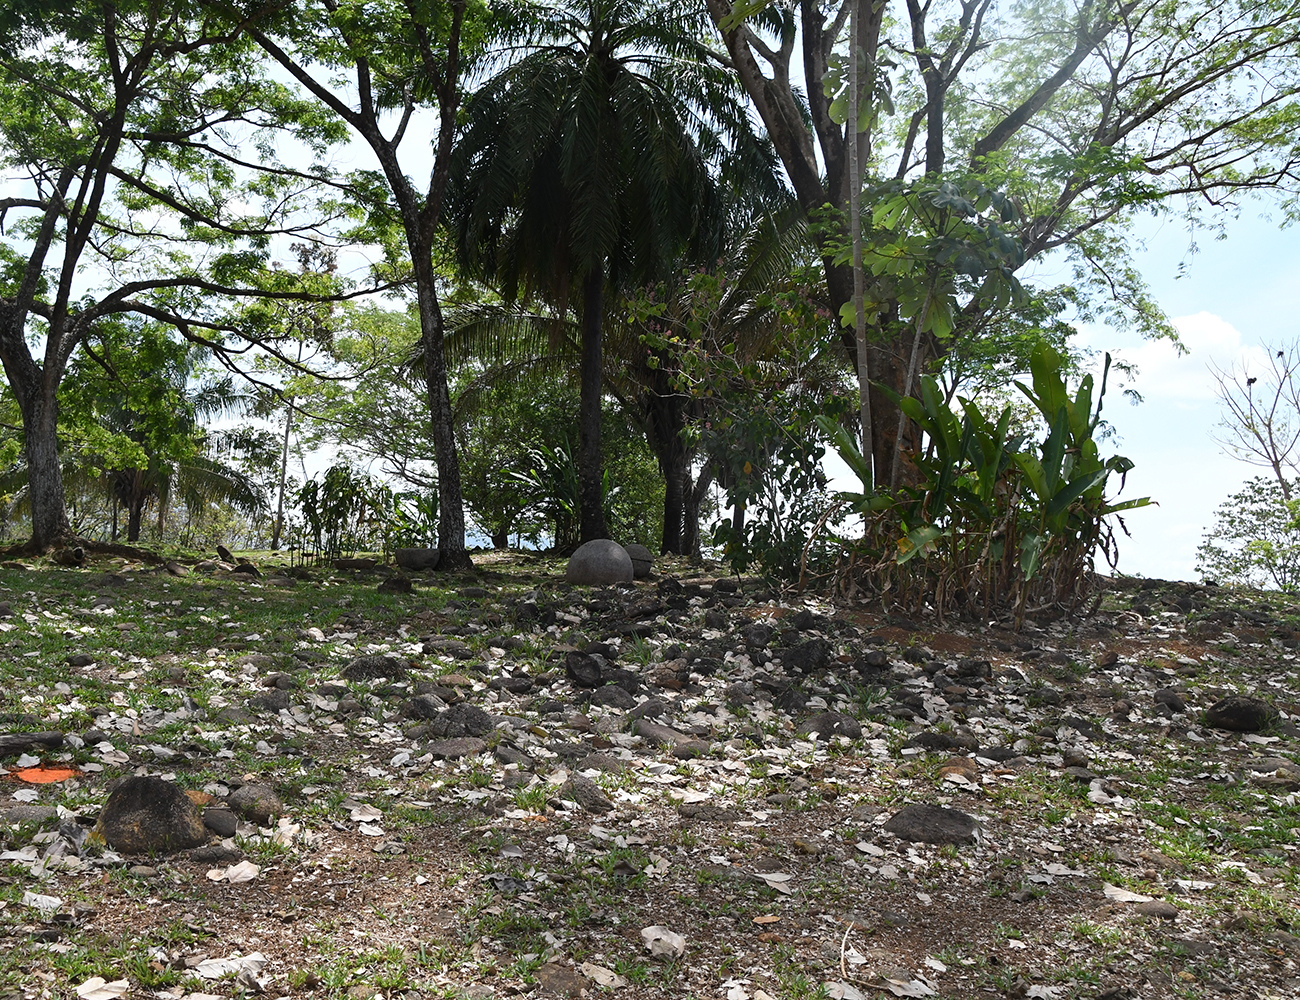 Sitio arqueológico Batambal